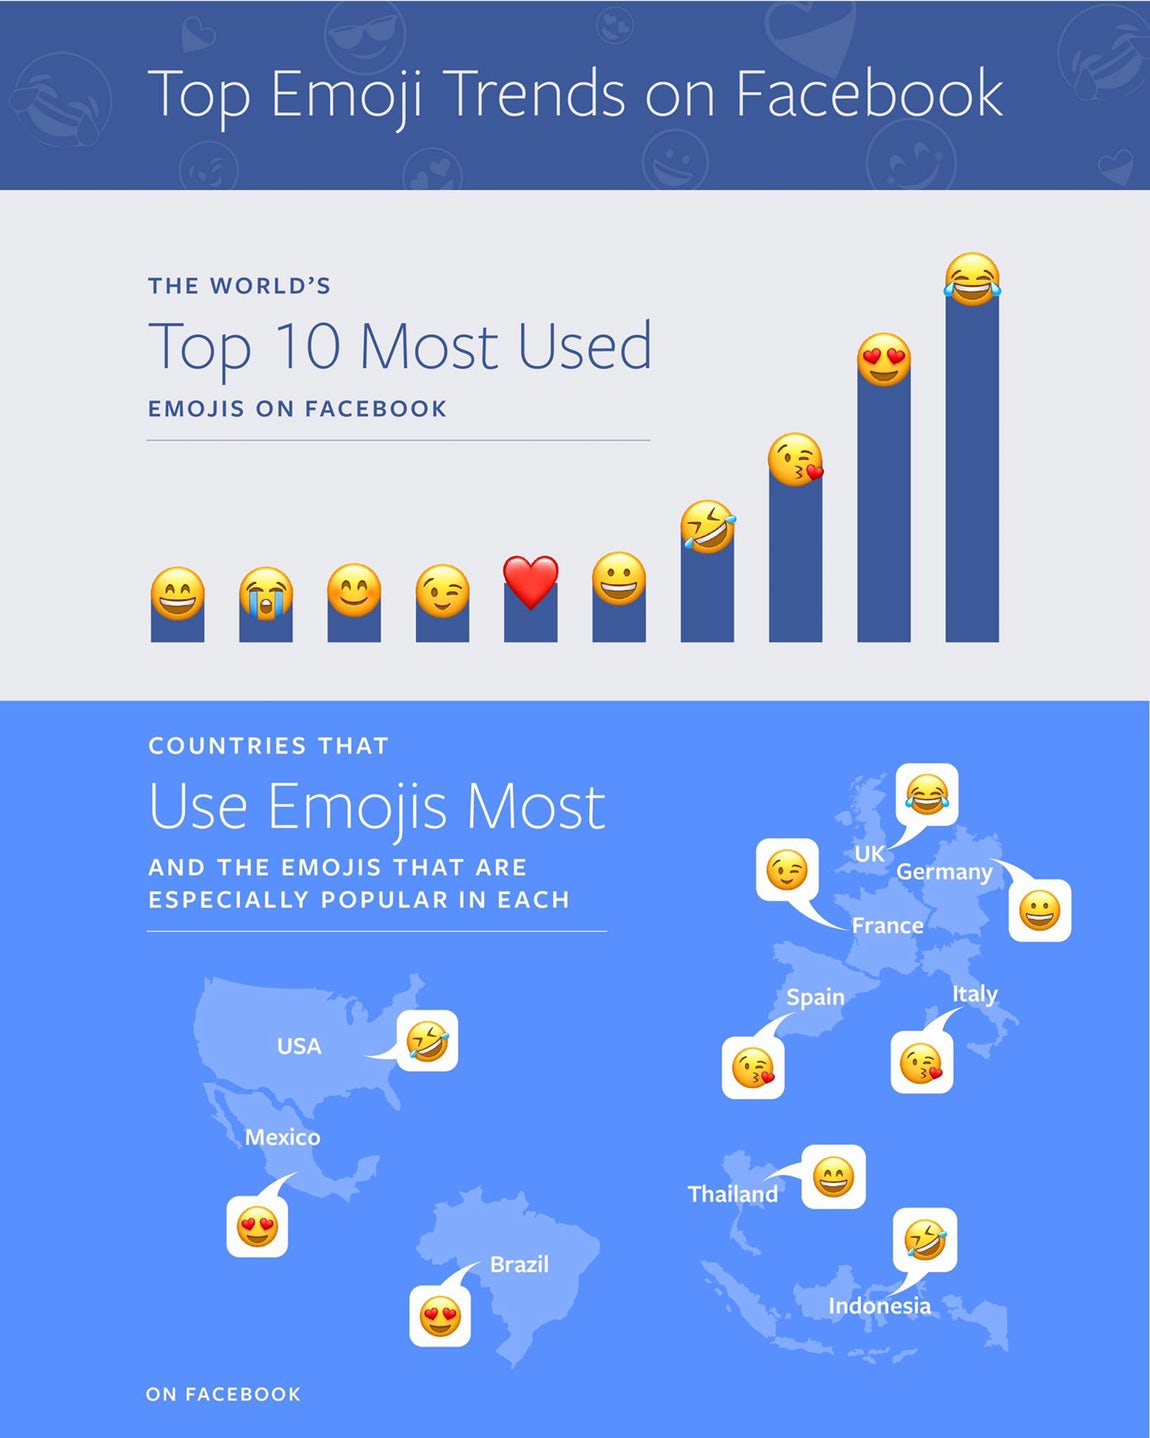 Top Emoji Trends on Facebook